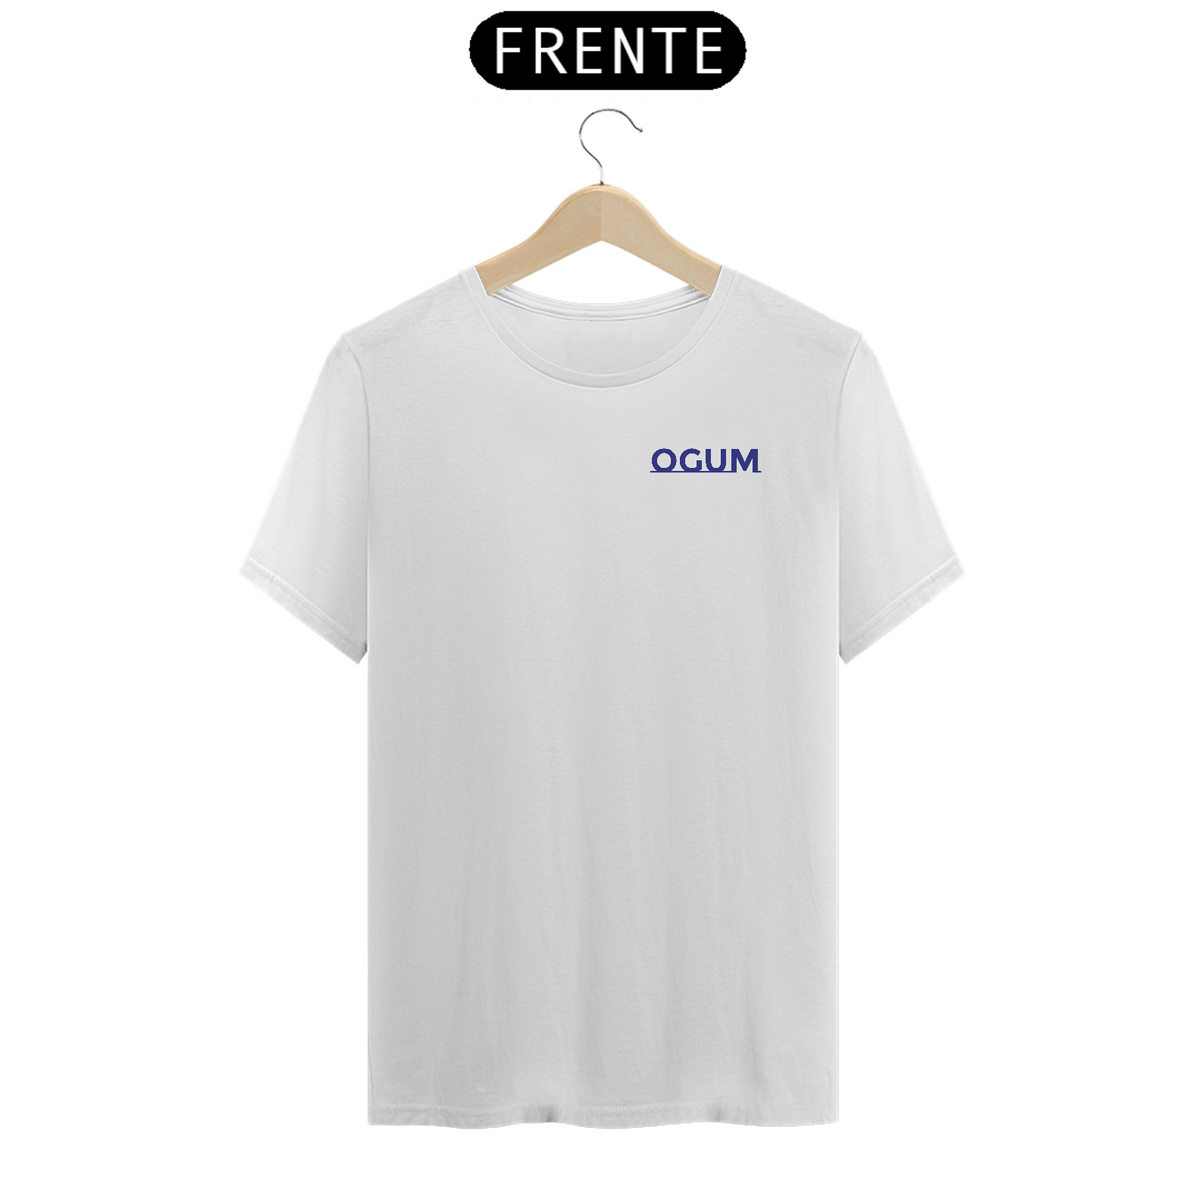 Nome do produto: Camiseta Ogum Minimalista